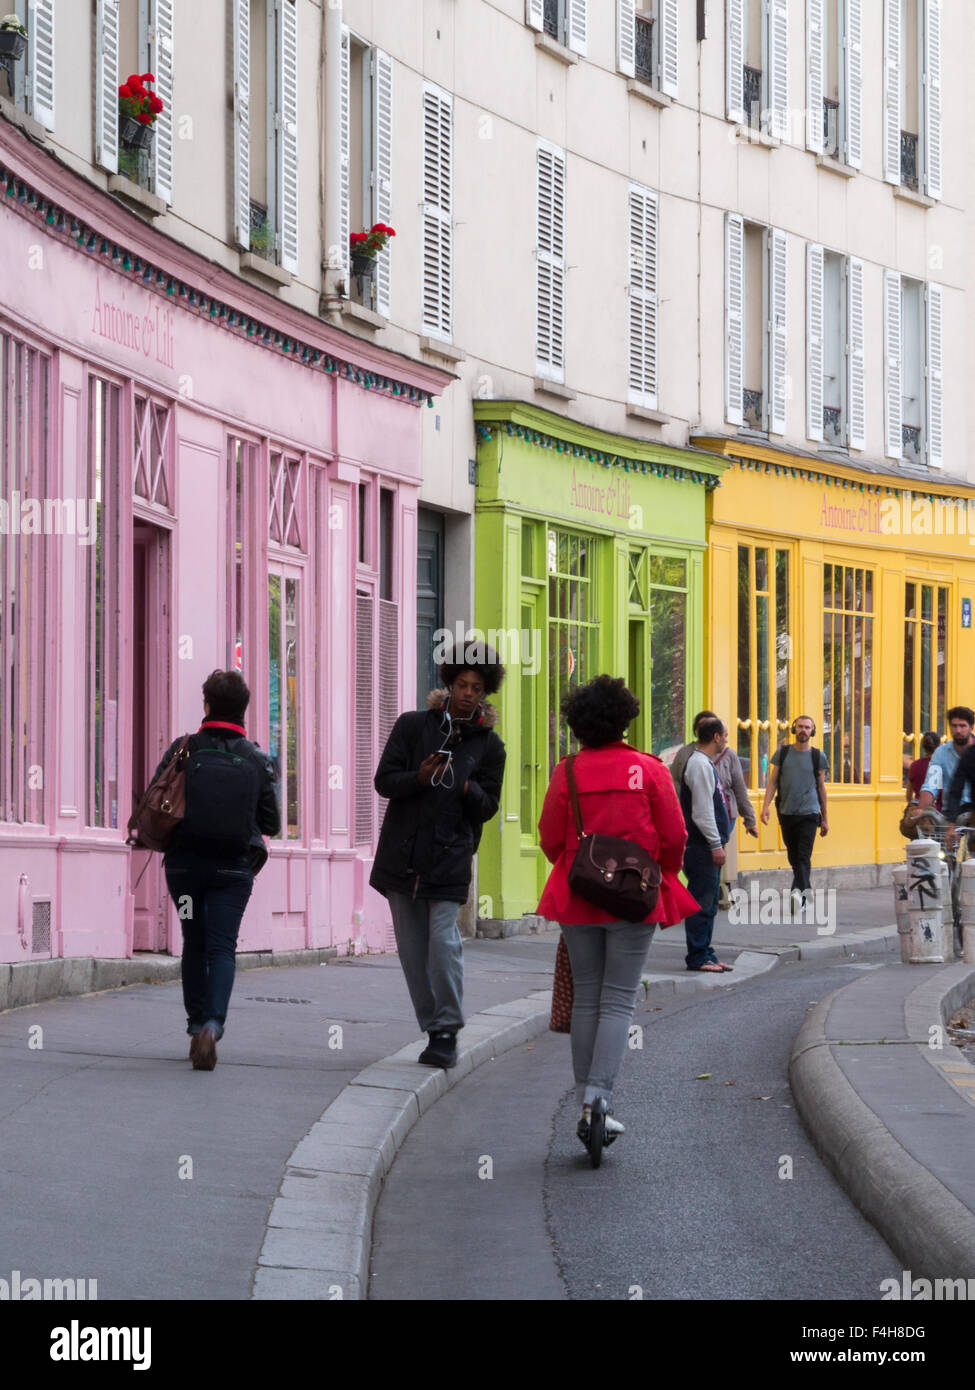 Parisian pedestrians by a colorful building Stock Photo